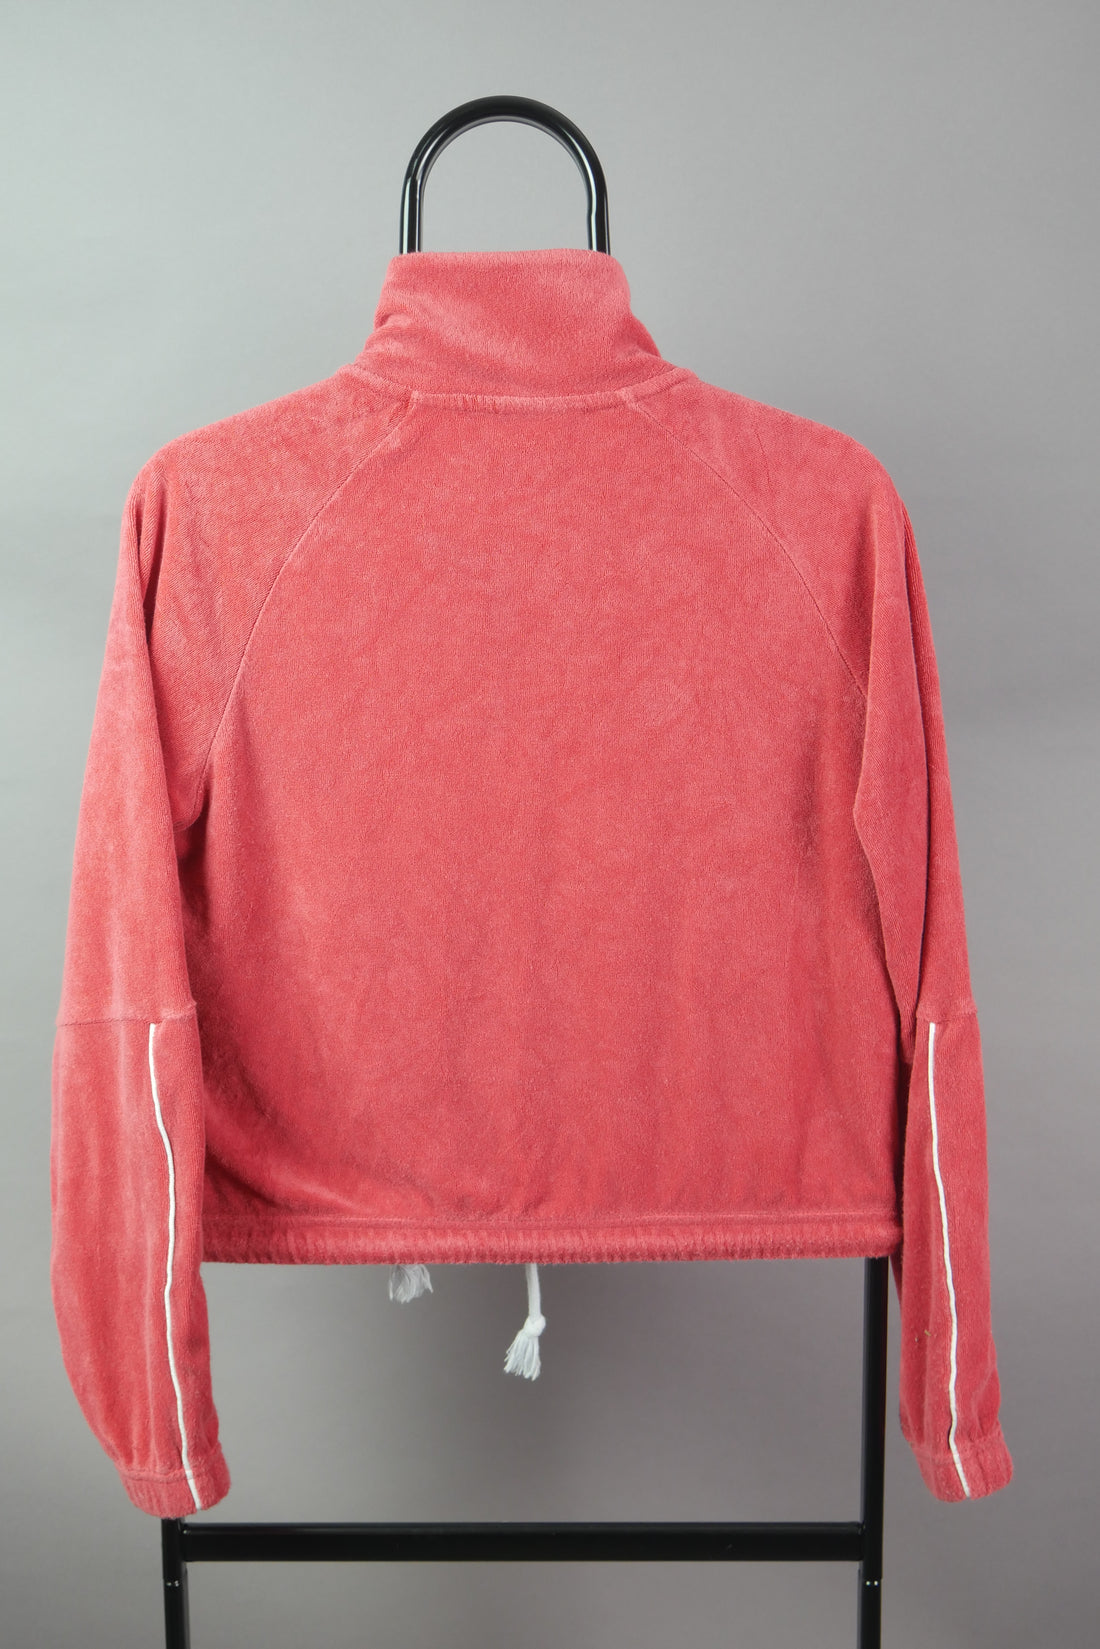 The Nike Full Zip Terry Towel Sweater (Women's XS)